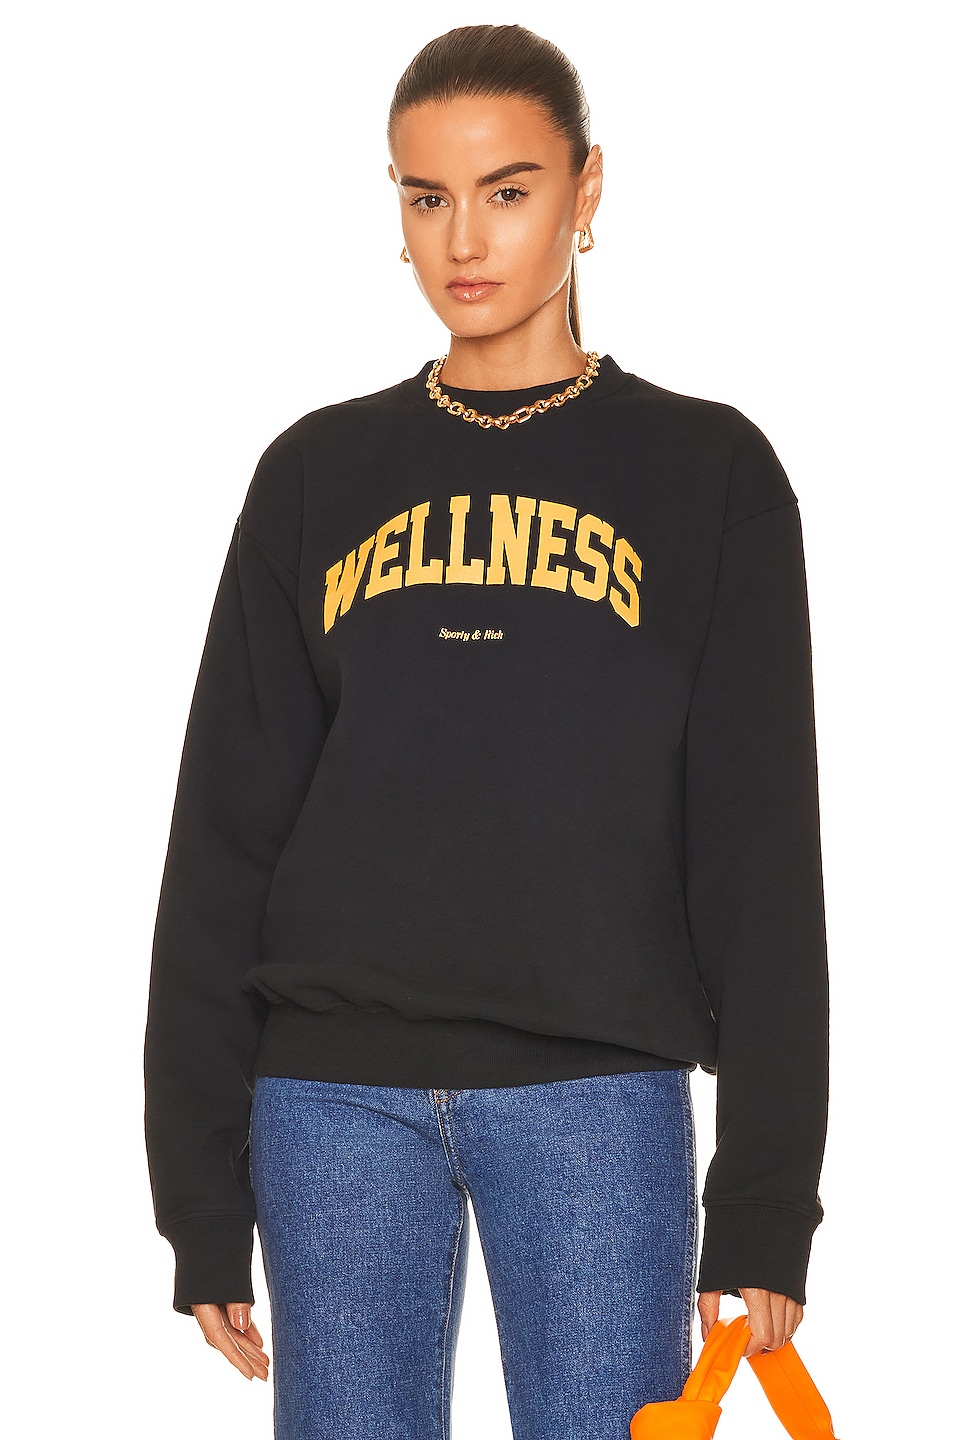 Image 1 of Sporty & Rich Wellness Ivy Crewneck Sweatshirt in Black & Yellow